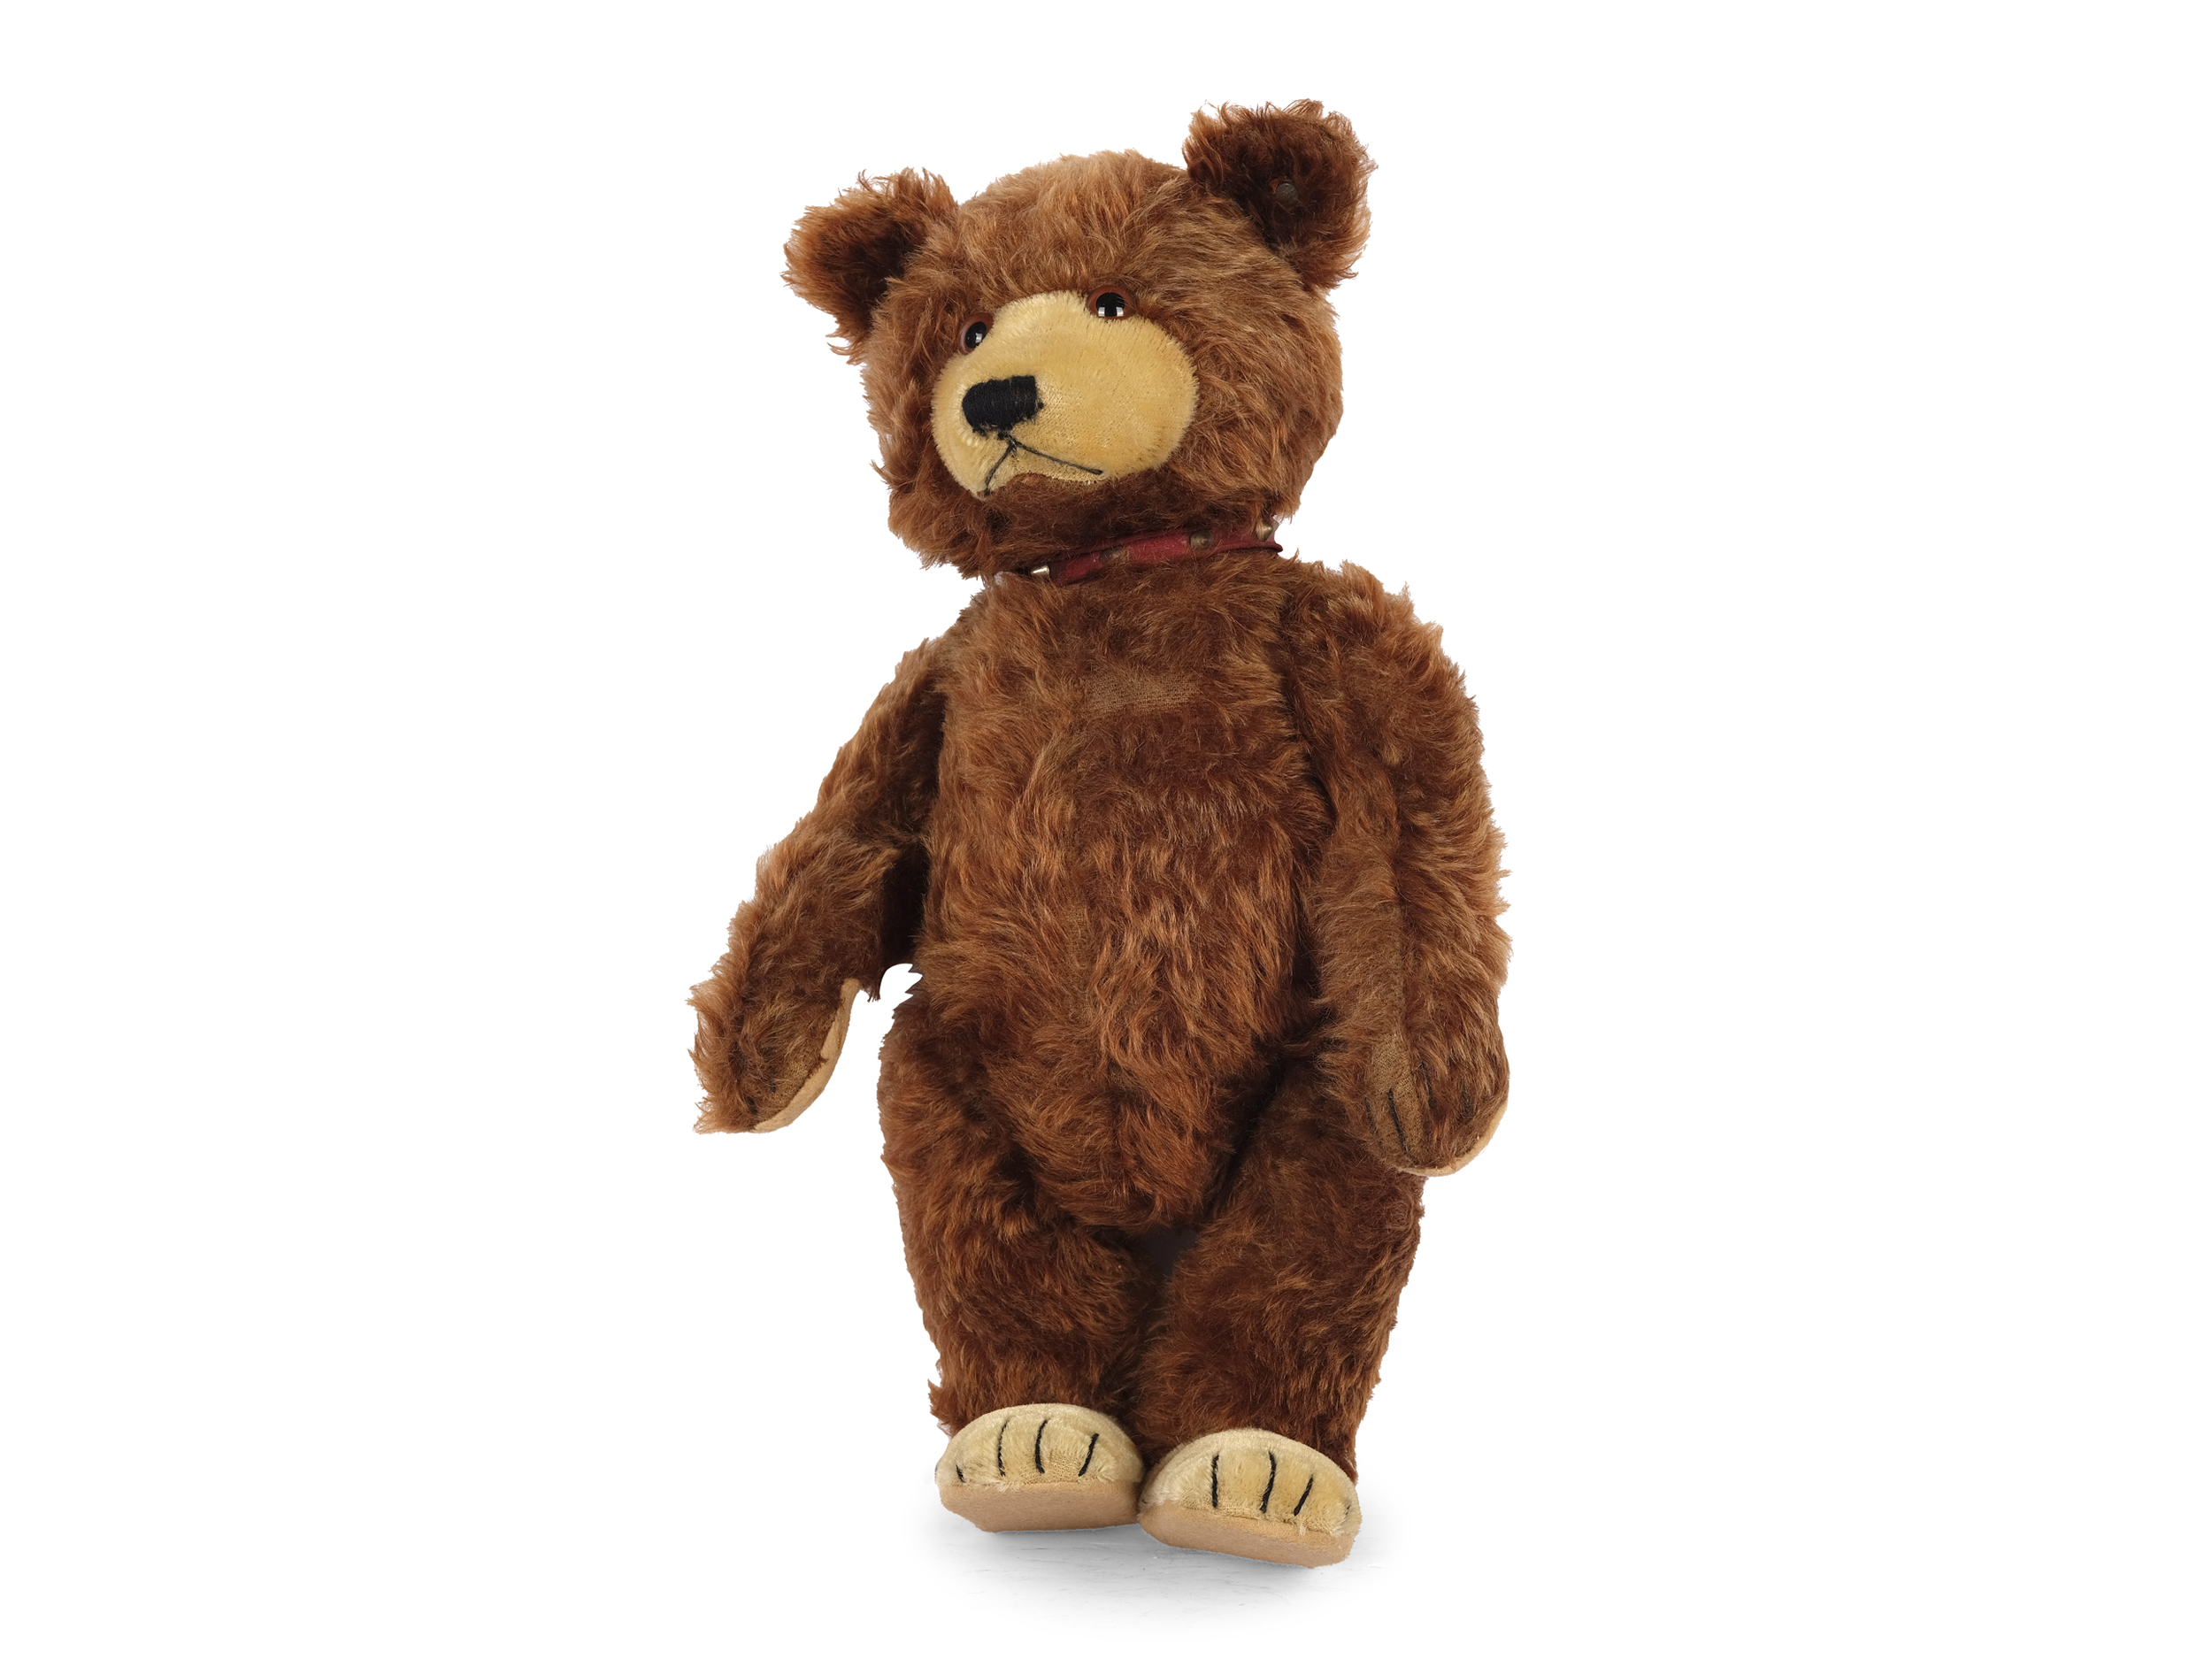 Teddy bear "Baby", Steiff - Image 2 of 4